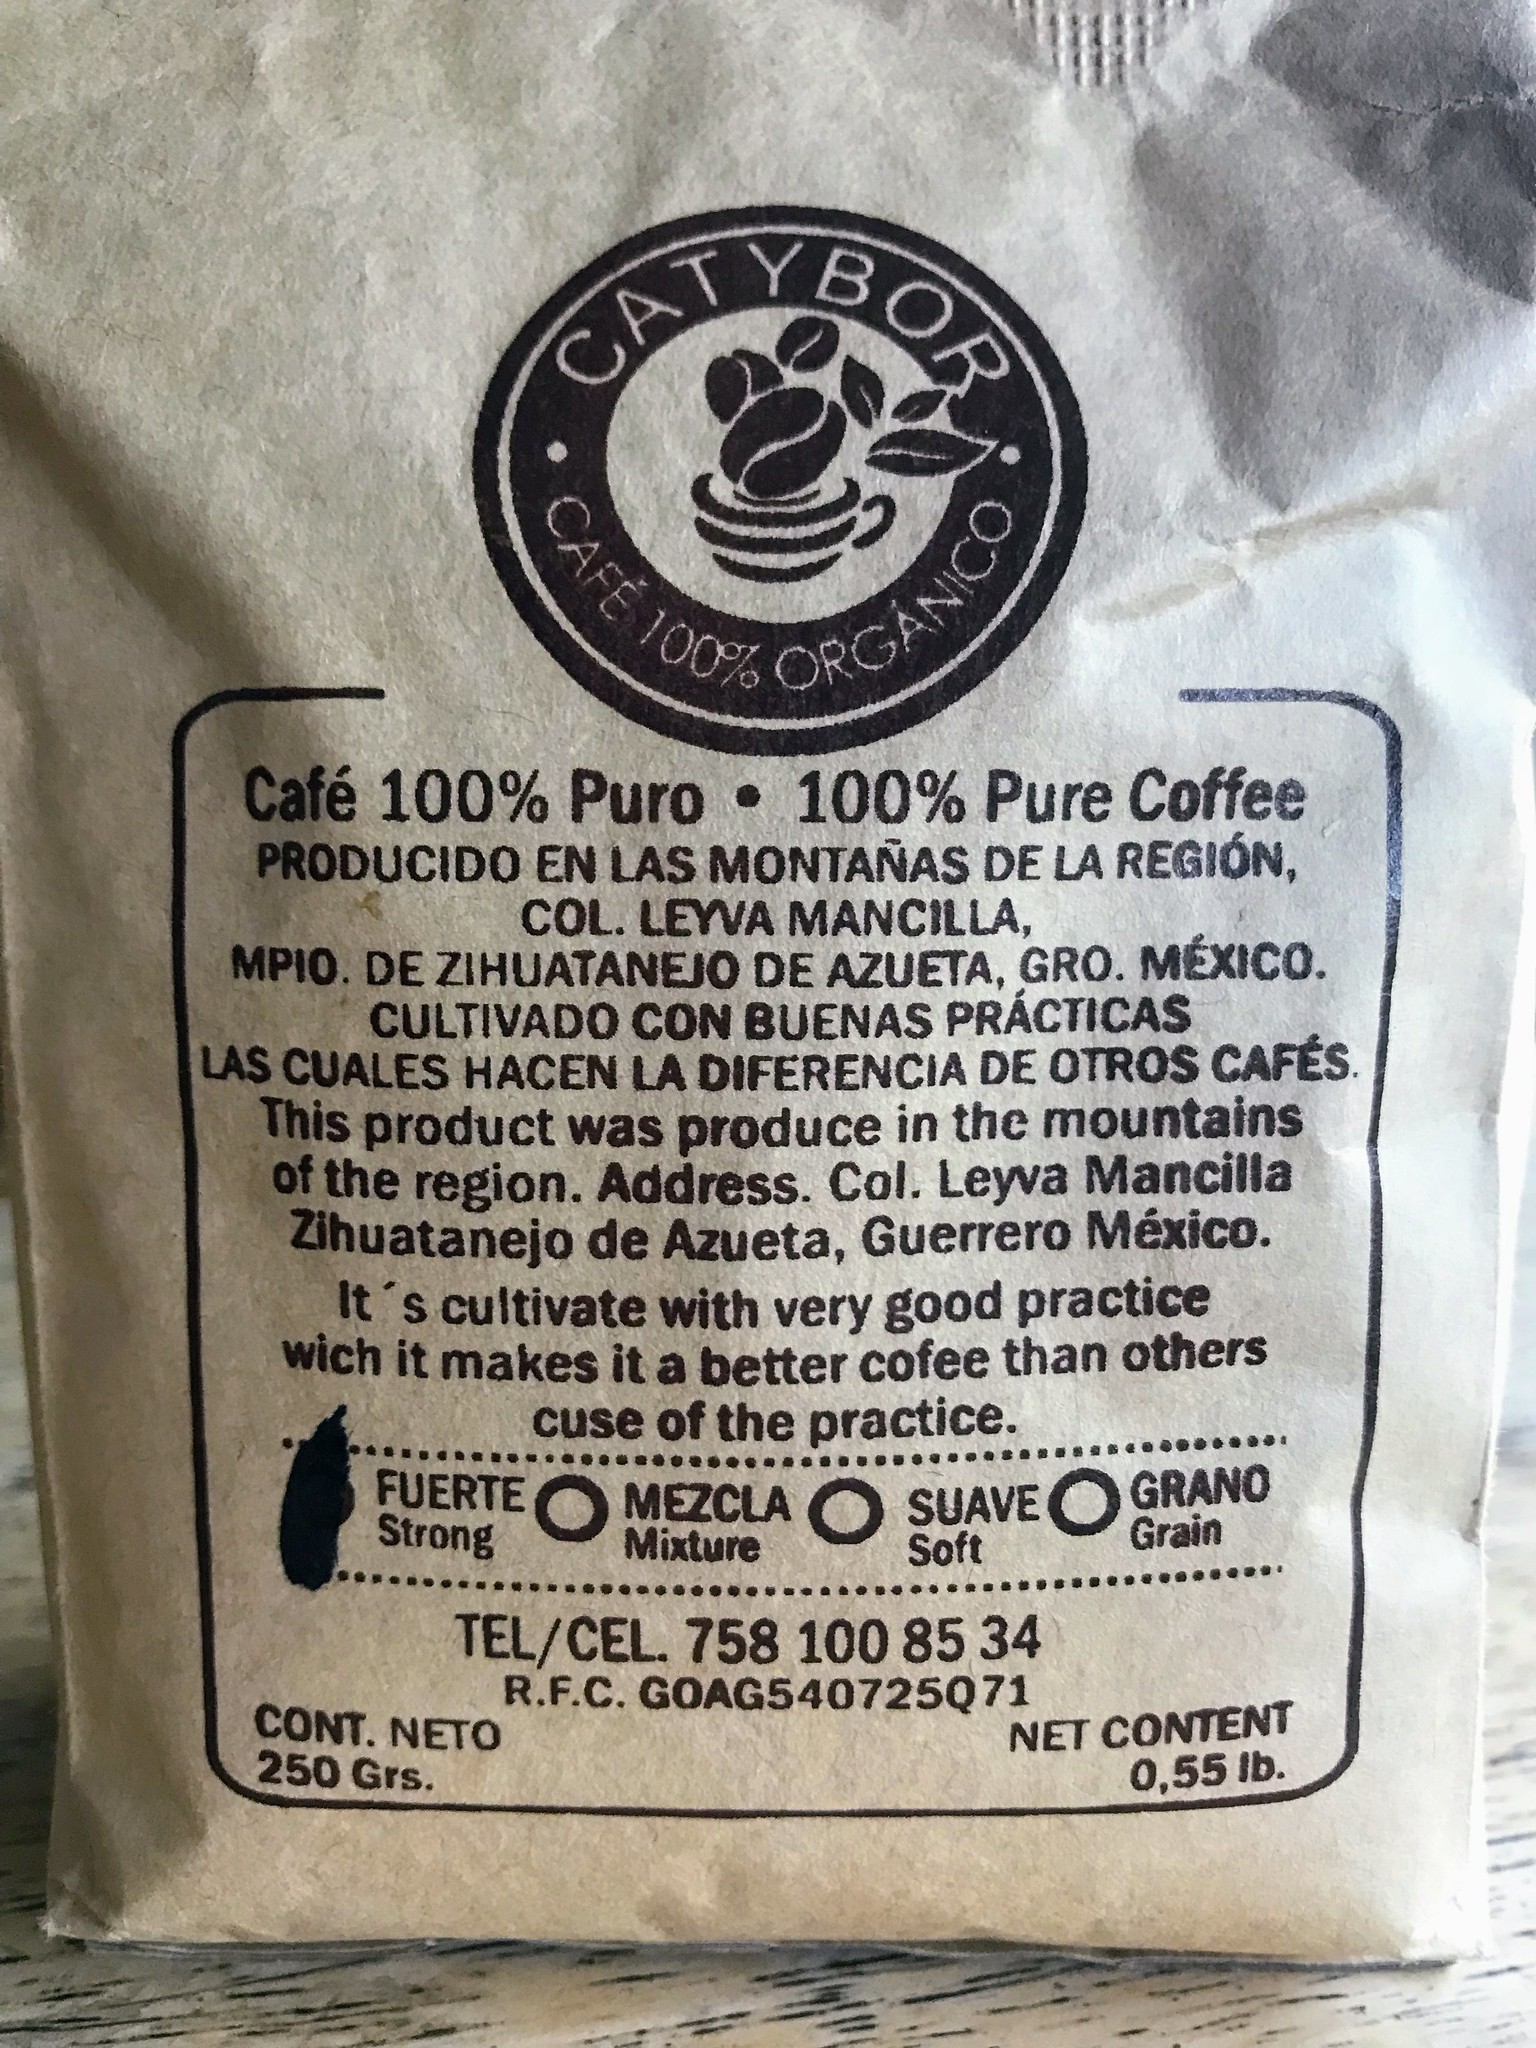 Catybor Café label